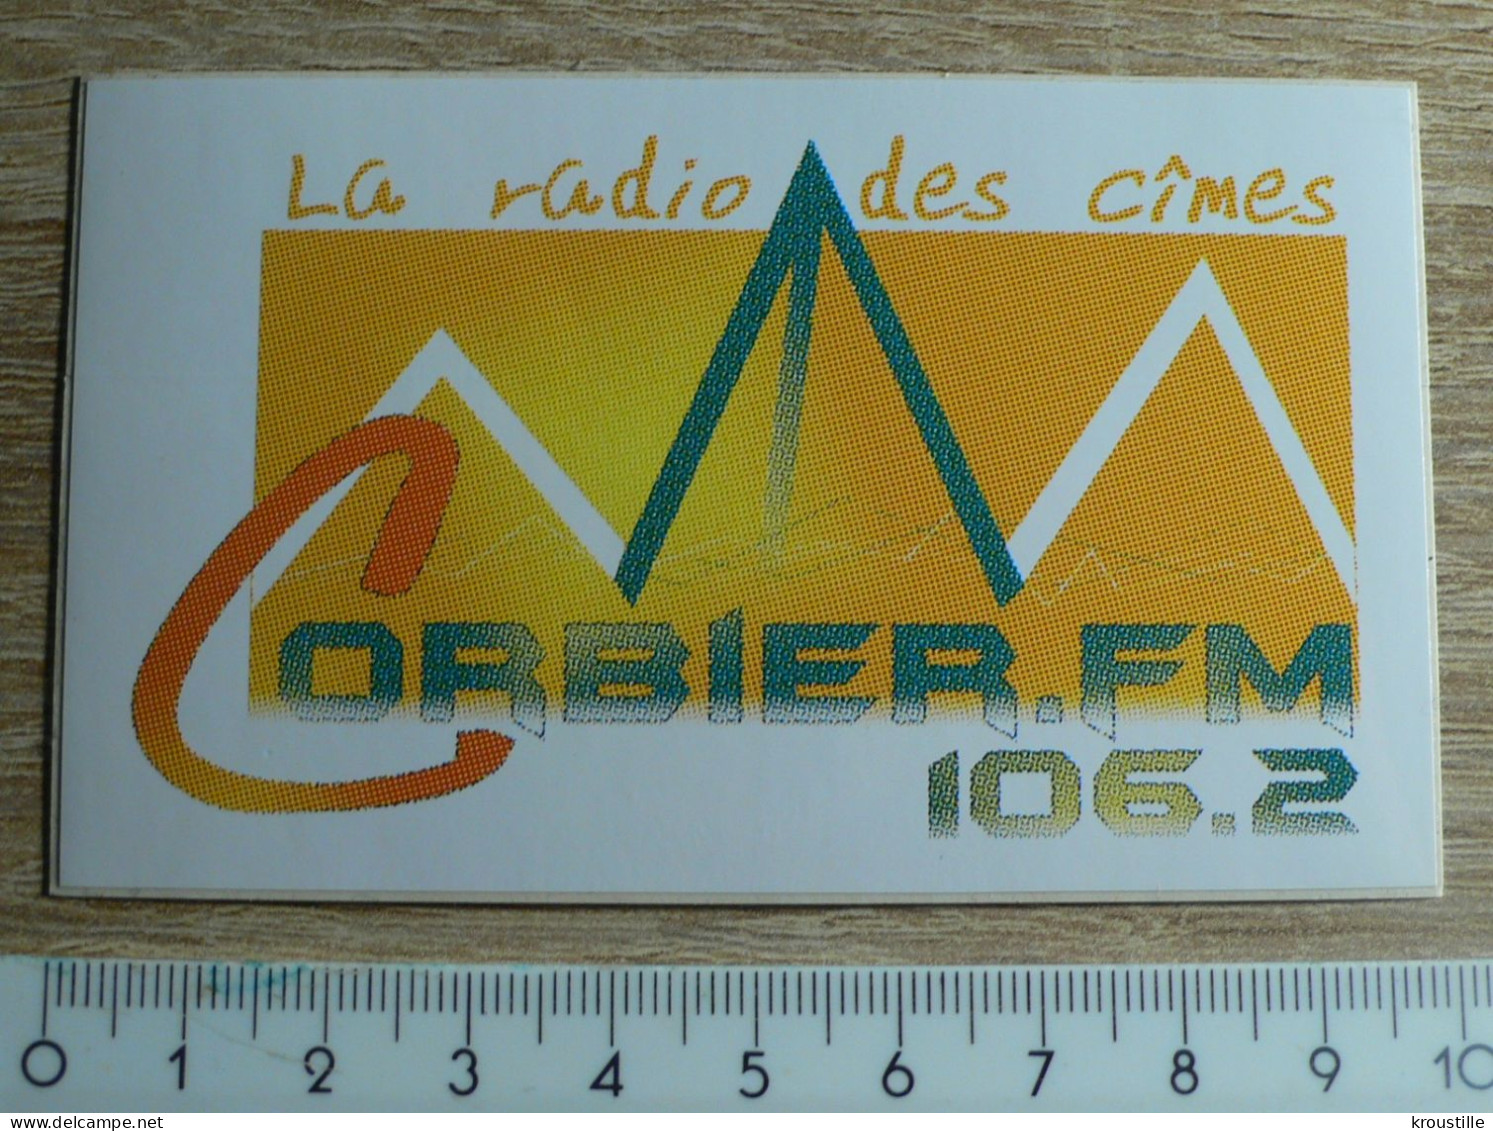 AUTOCOLLANT RADIO : CORBIER FM - LA RADIO DES CIMES - Stickers